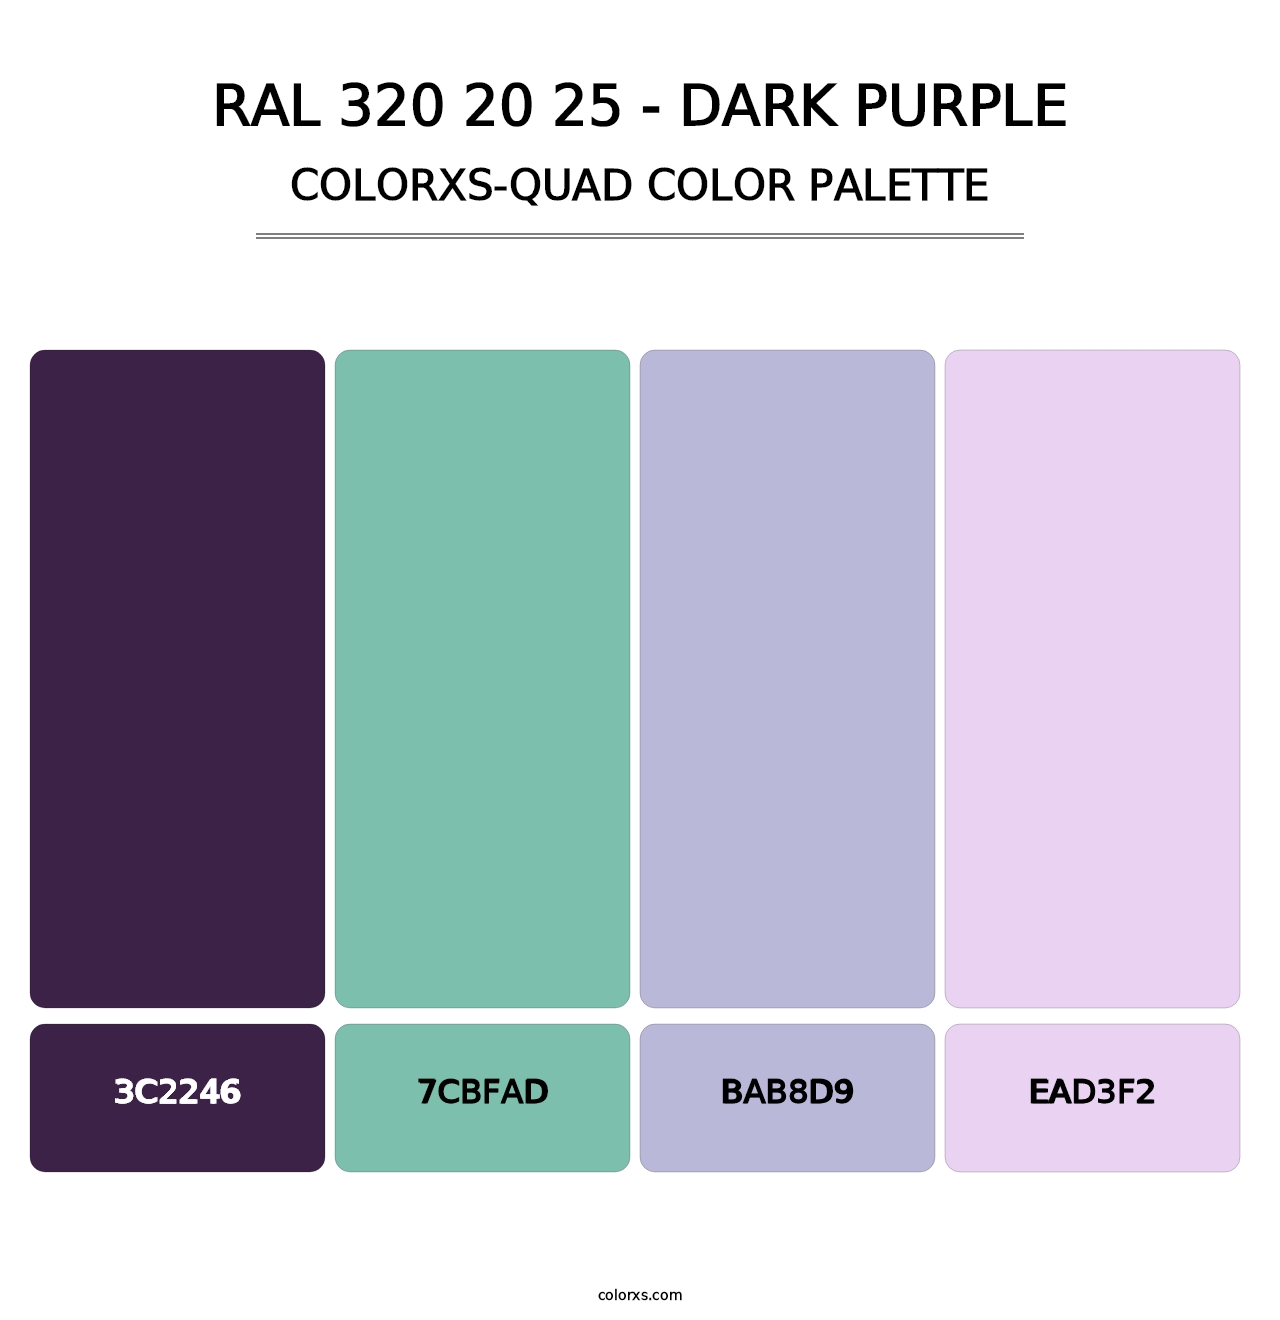 RAL 320 20 25 - Dark Purple - Colorxs Quad Palette